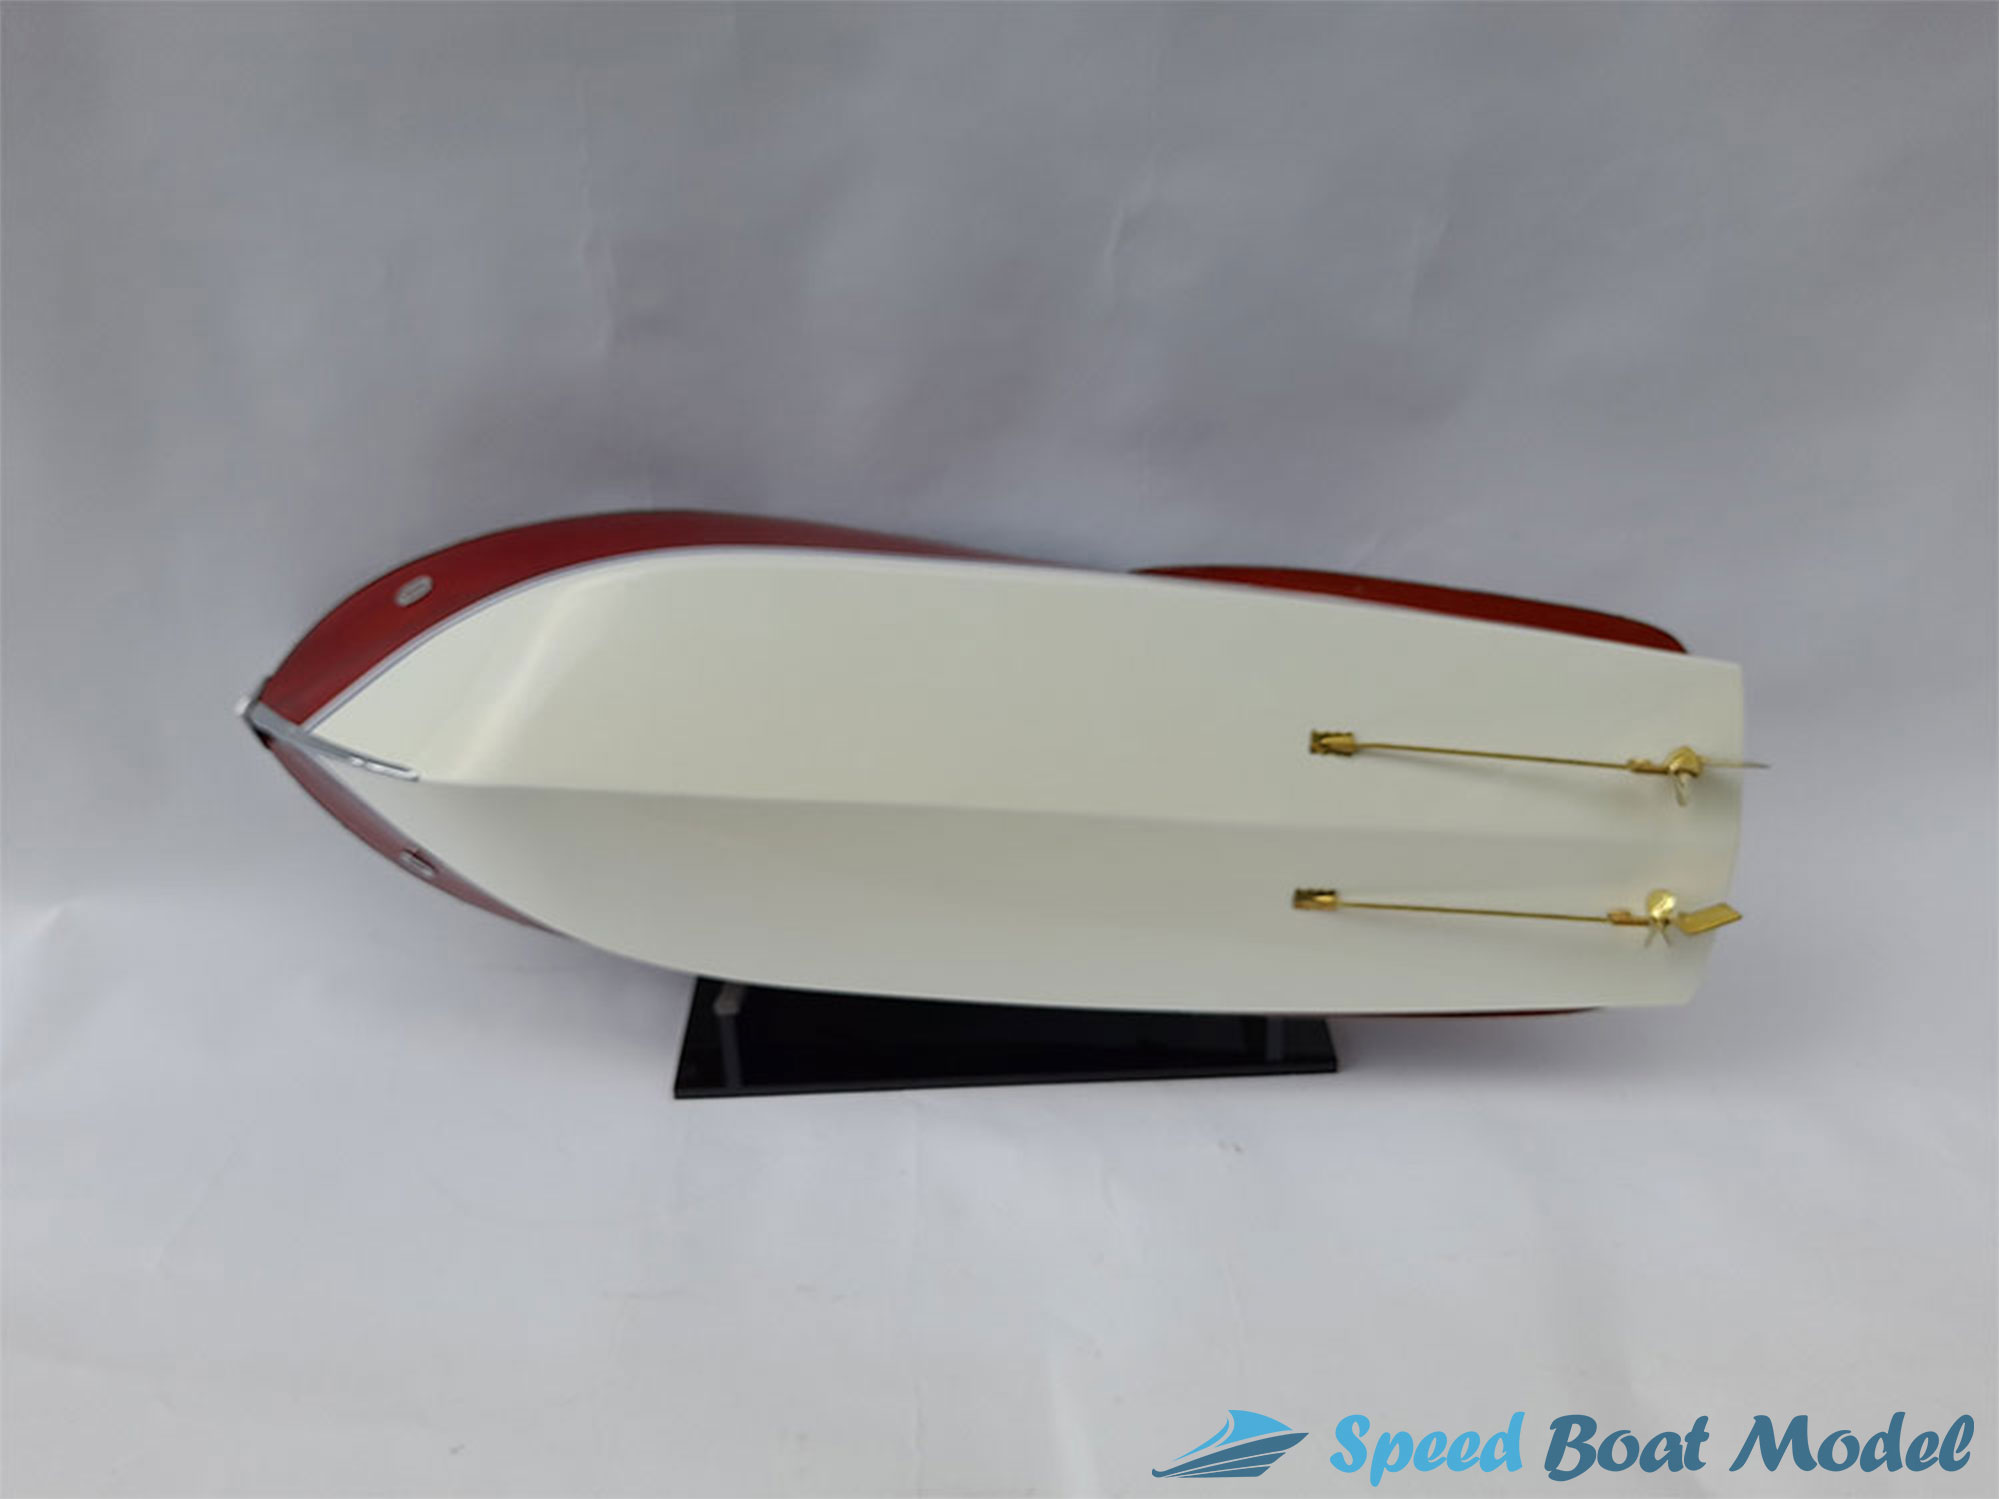 Super Riva Aquarama Classic Boat Model 34.2"